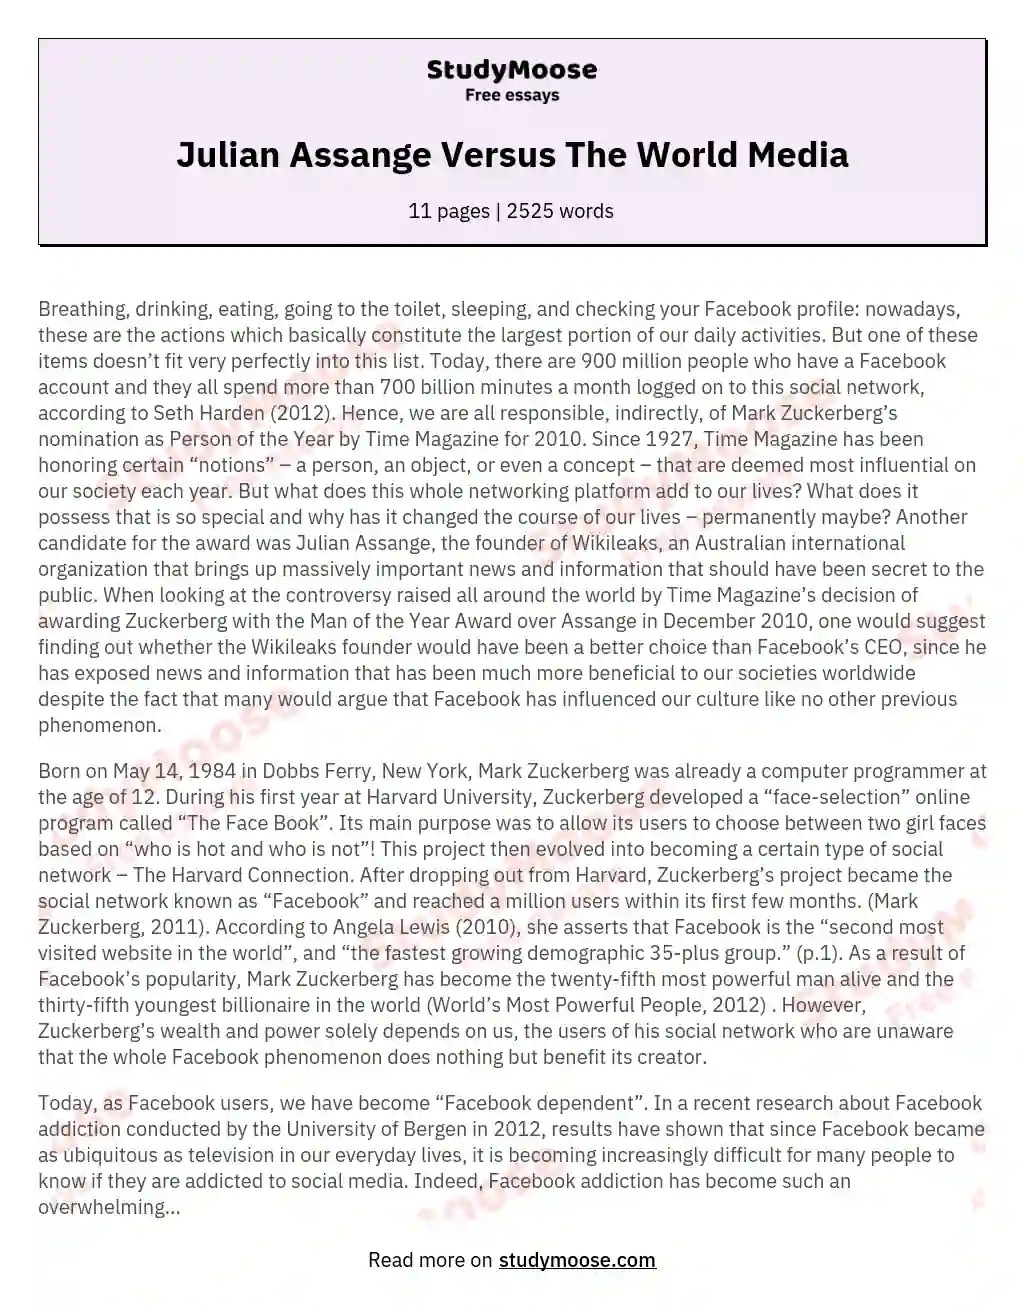 Julian Assange Versus The World Media essay